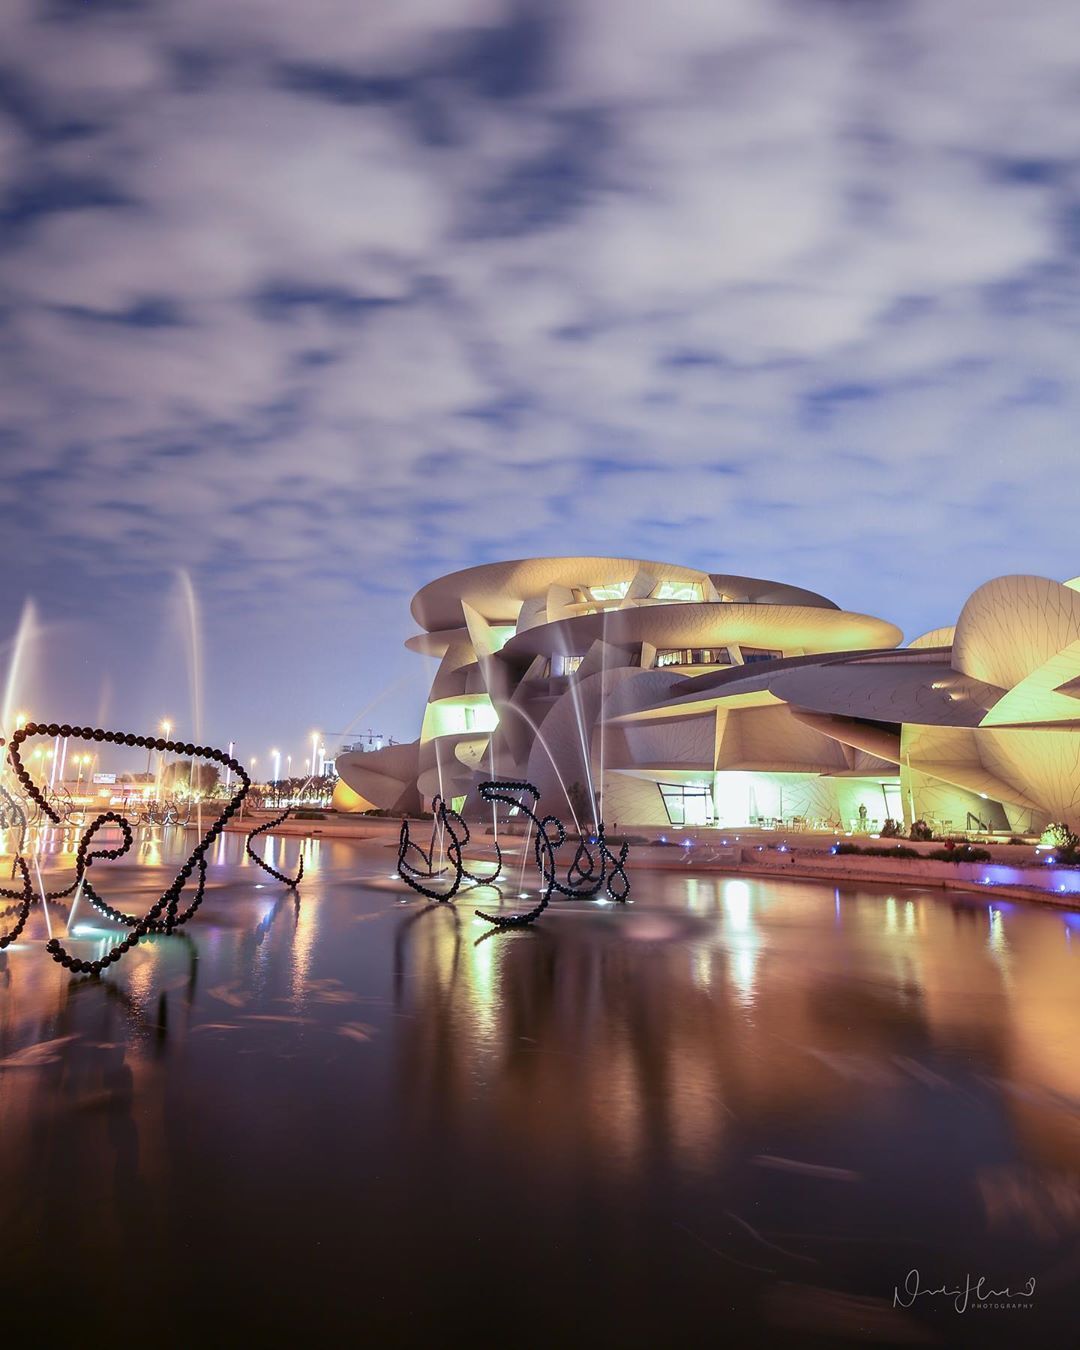 Doha 'Energy Playground' to open in 2022 - Doha News | Qatar